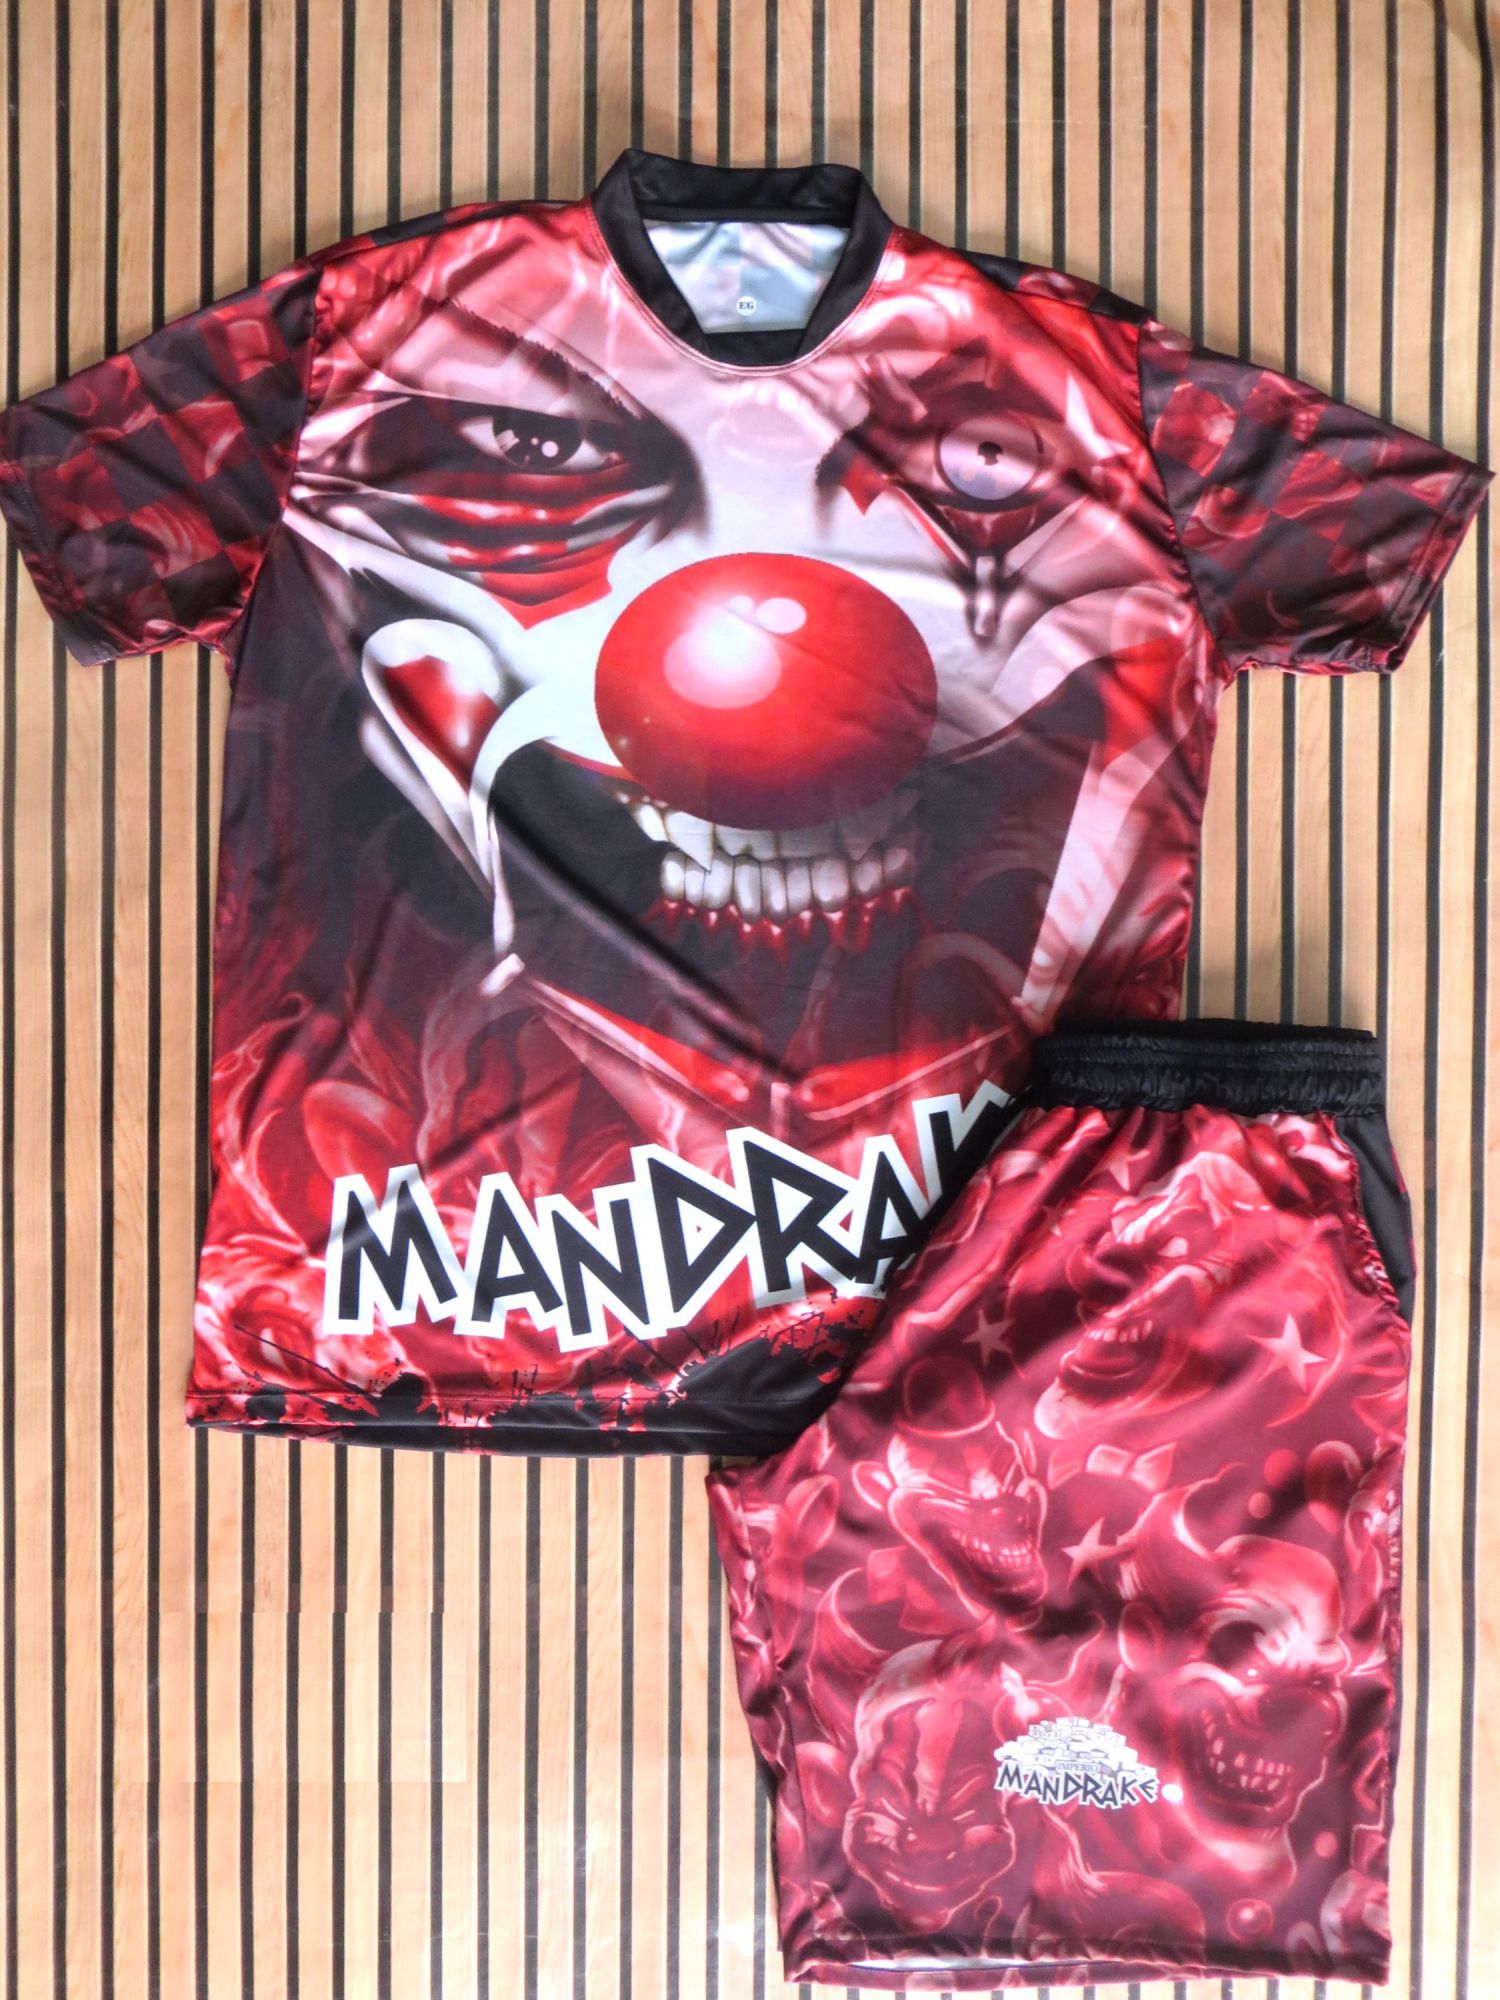 🎭 IMPERIO MANDRAKE on Instagram: “Kit Mandrake. Camiseta C08 Gola